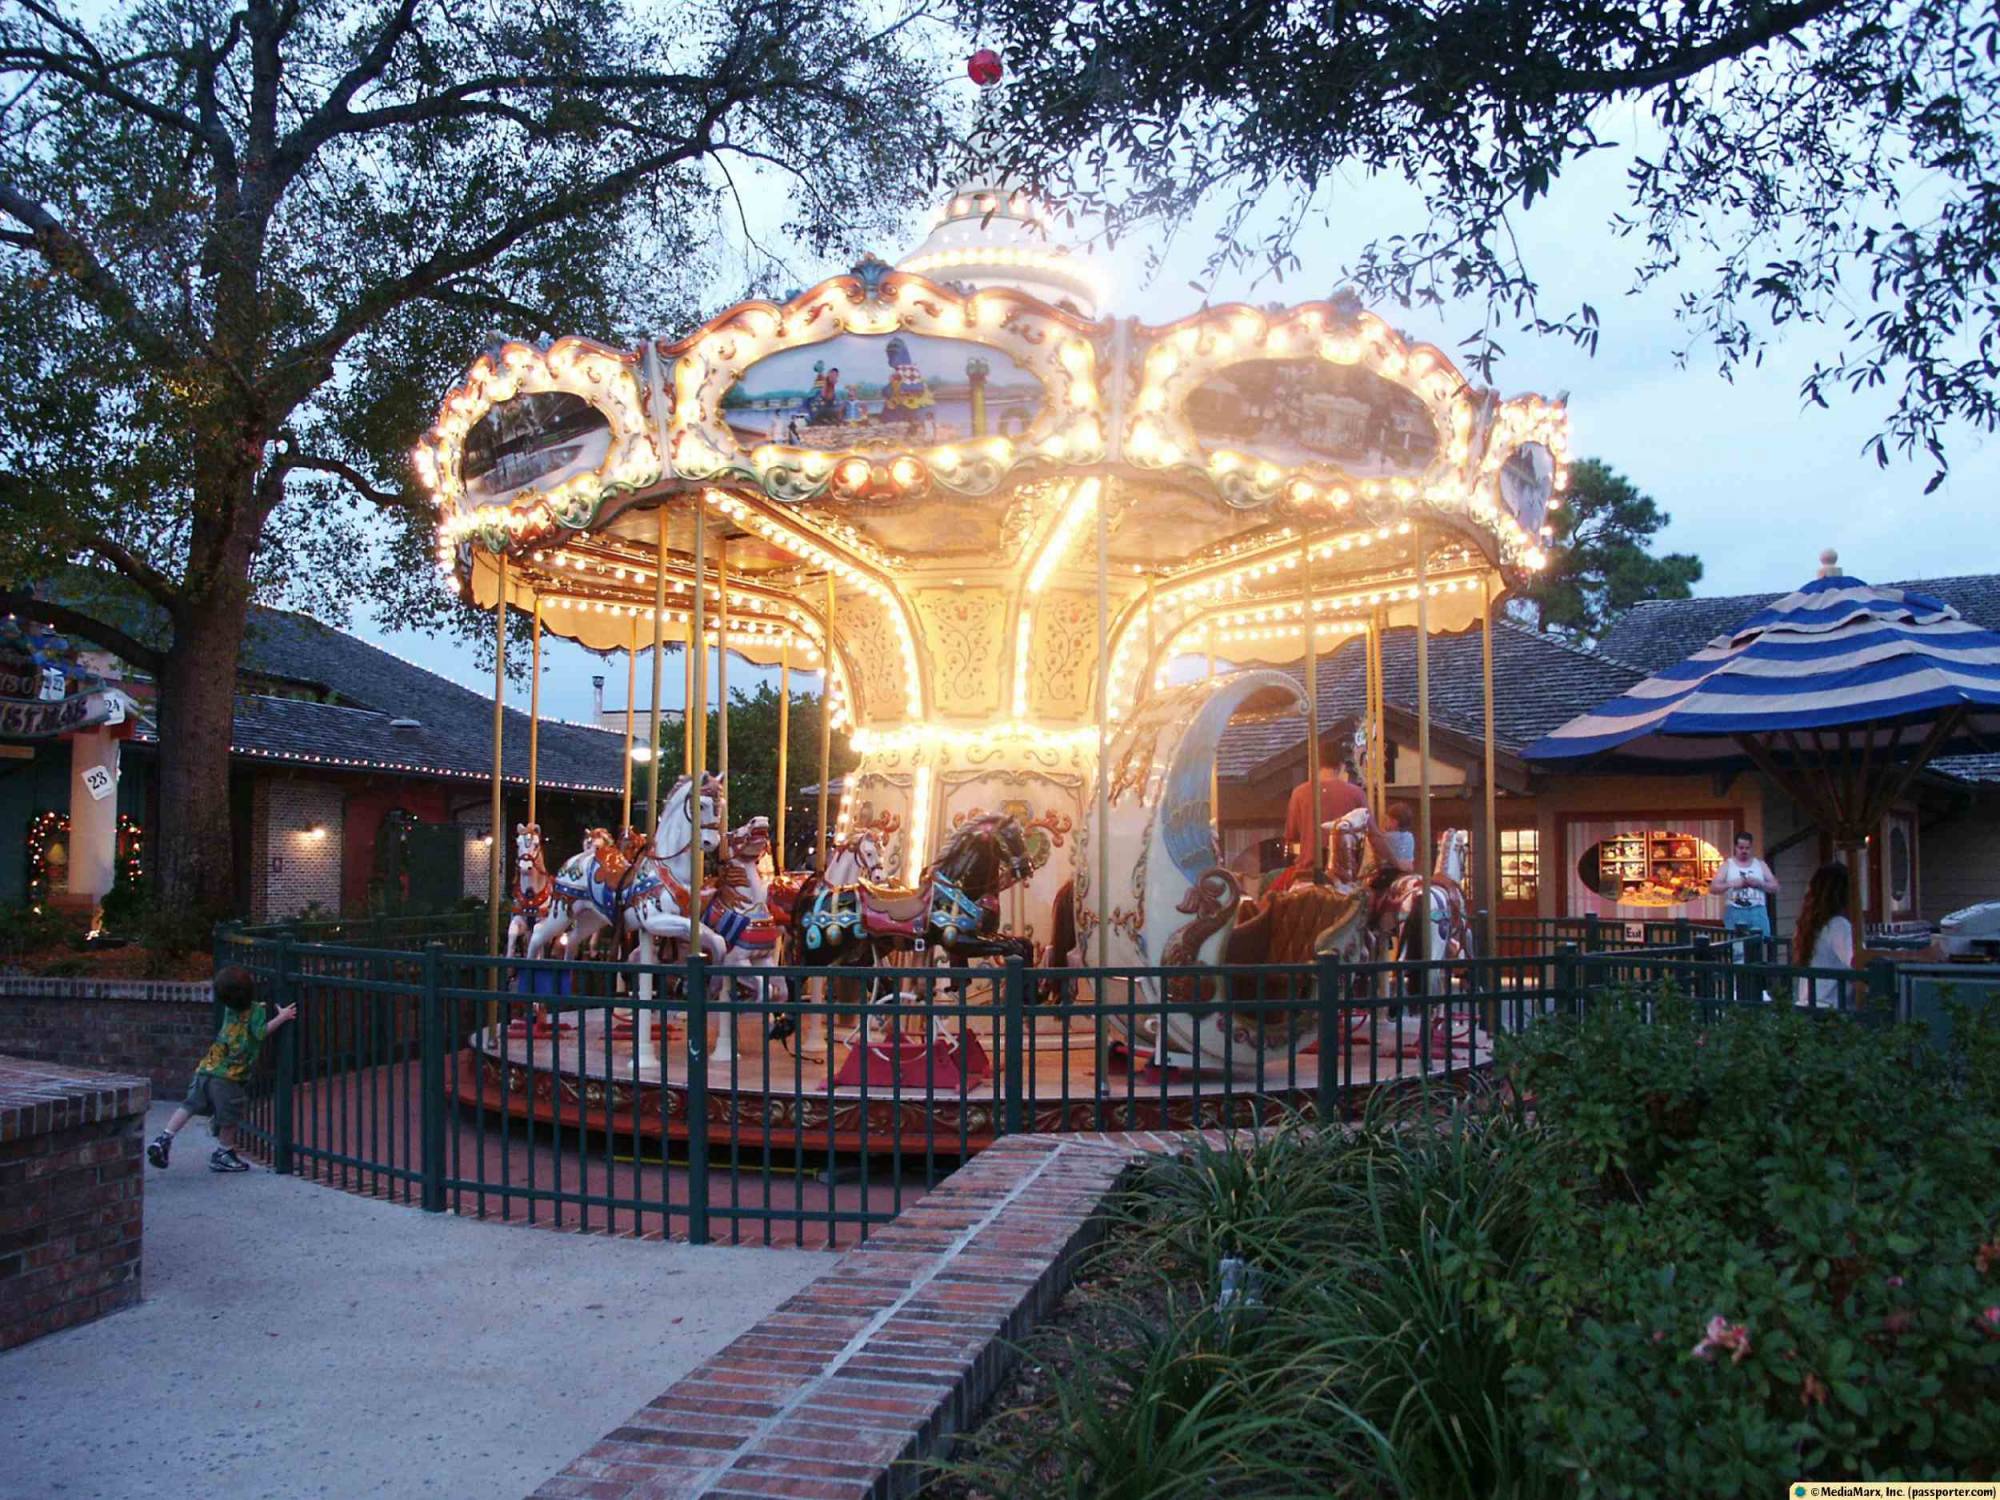 Downtown Disney Marketplace - Merry Go Round